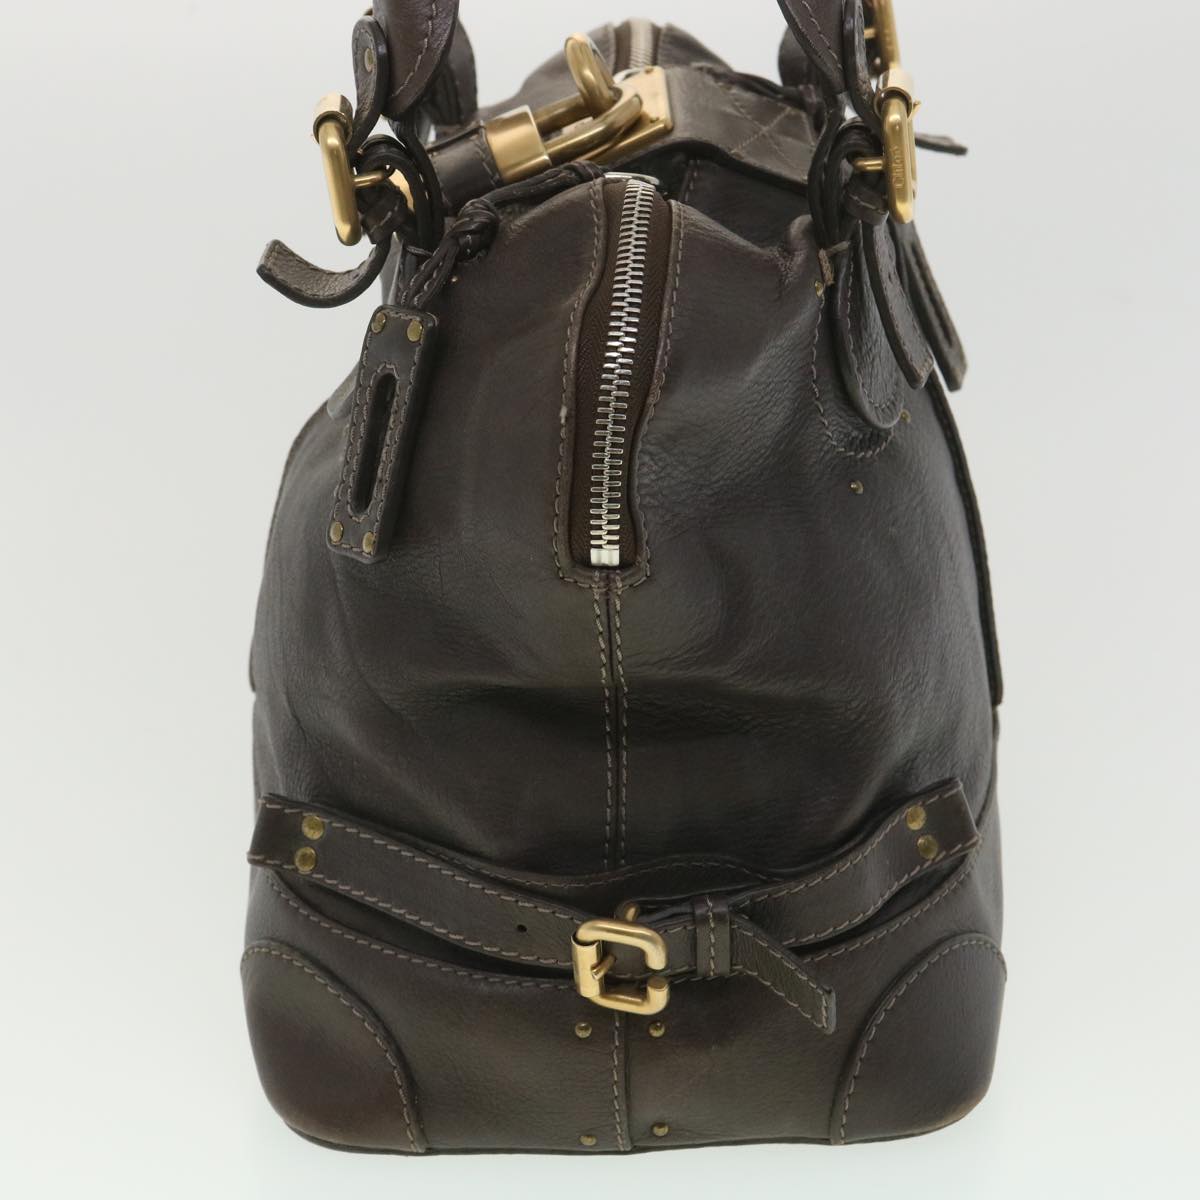 Chloe Paddington Hand Bag Leather Brown 03-07-53 6 Auth 37838